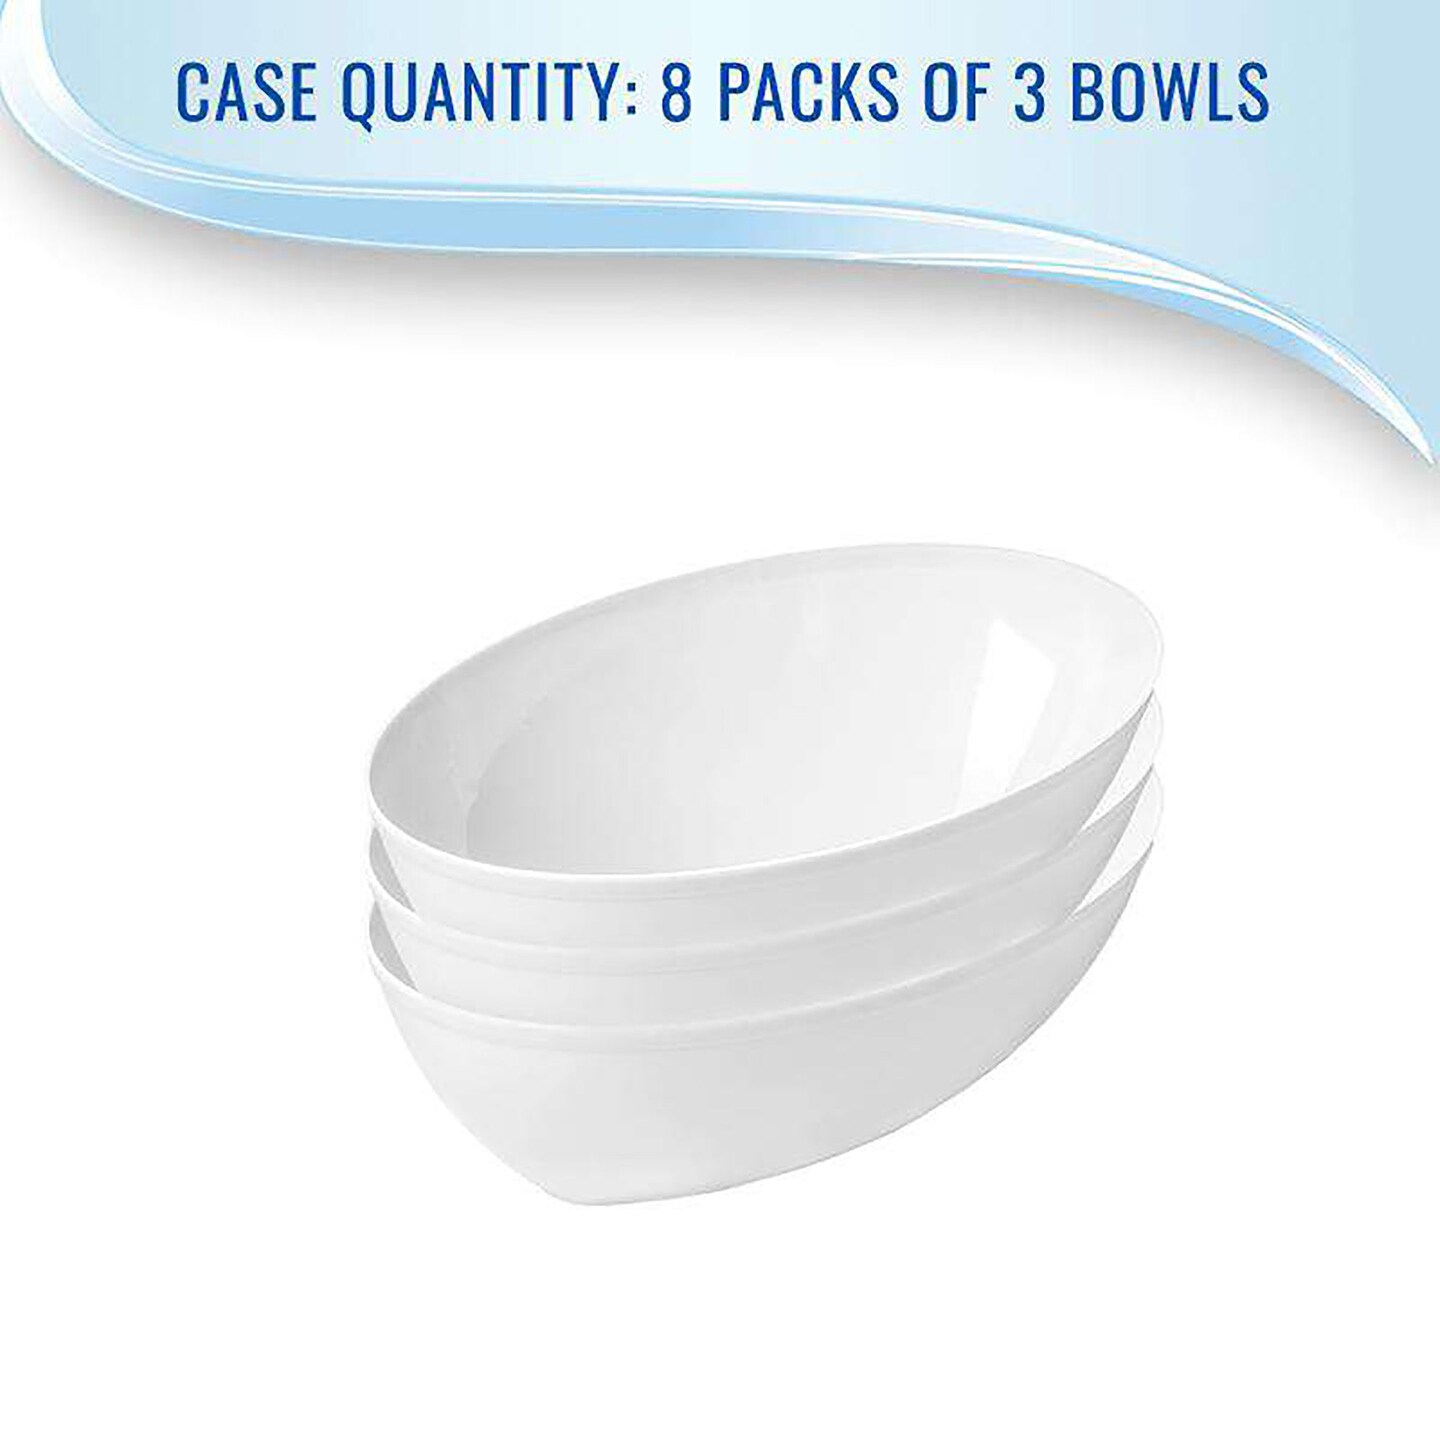 White Oval Plastic Serving Bowls - 2 Quarts (24 Bowls)